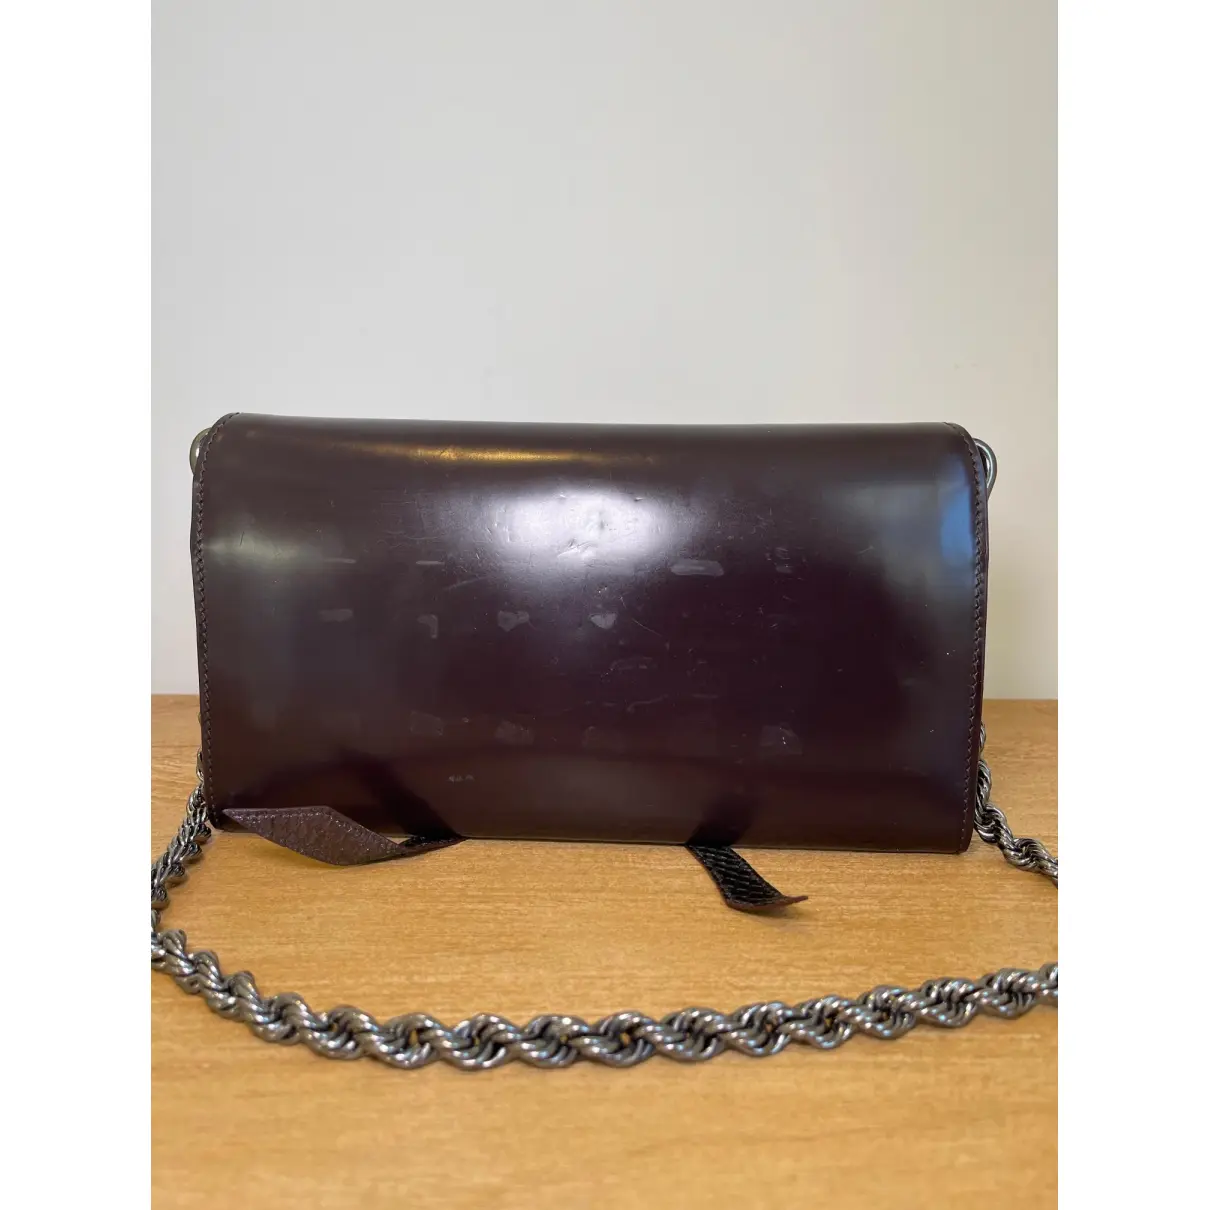 Buy Nina Ricci Leather handbag online - Vintage